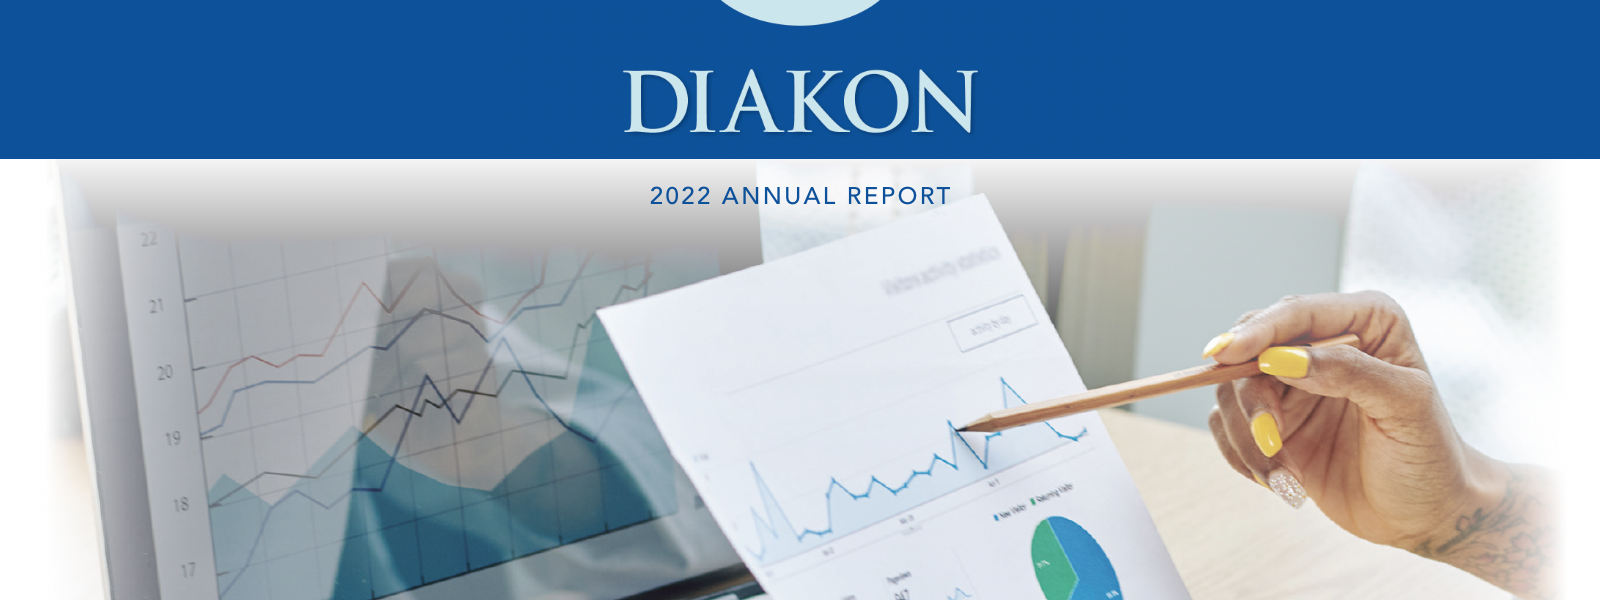 Diakon 2022 annual report